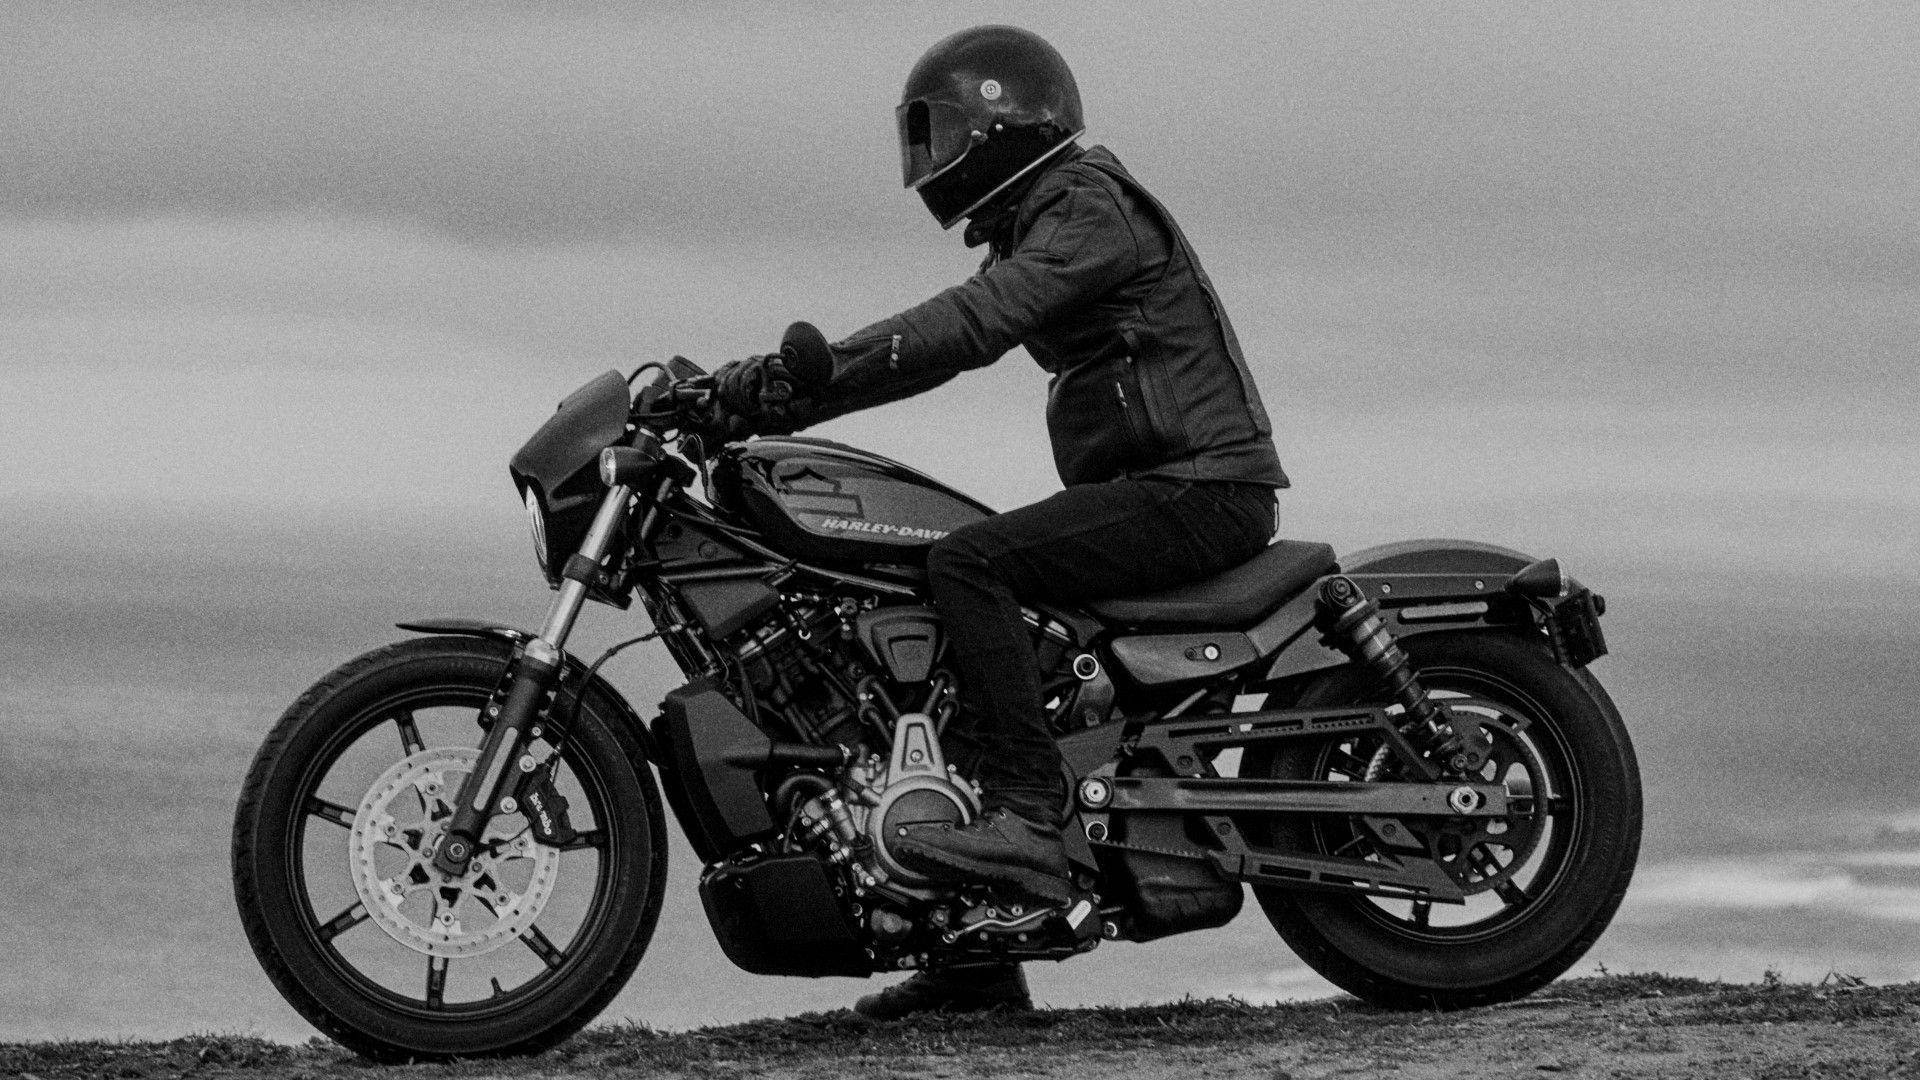 2023 Harley-Davidson Nightster side profile view